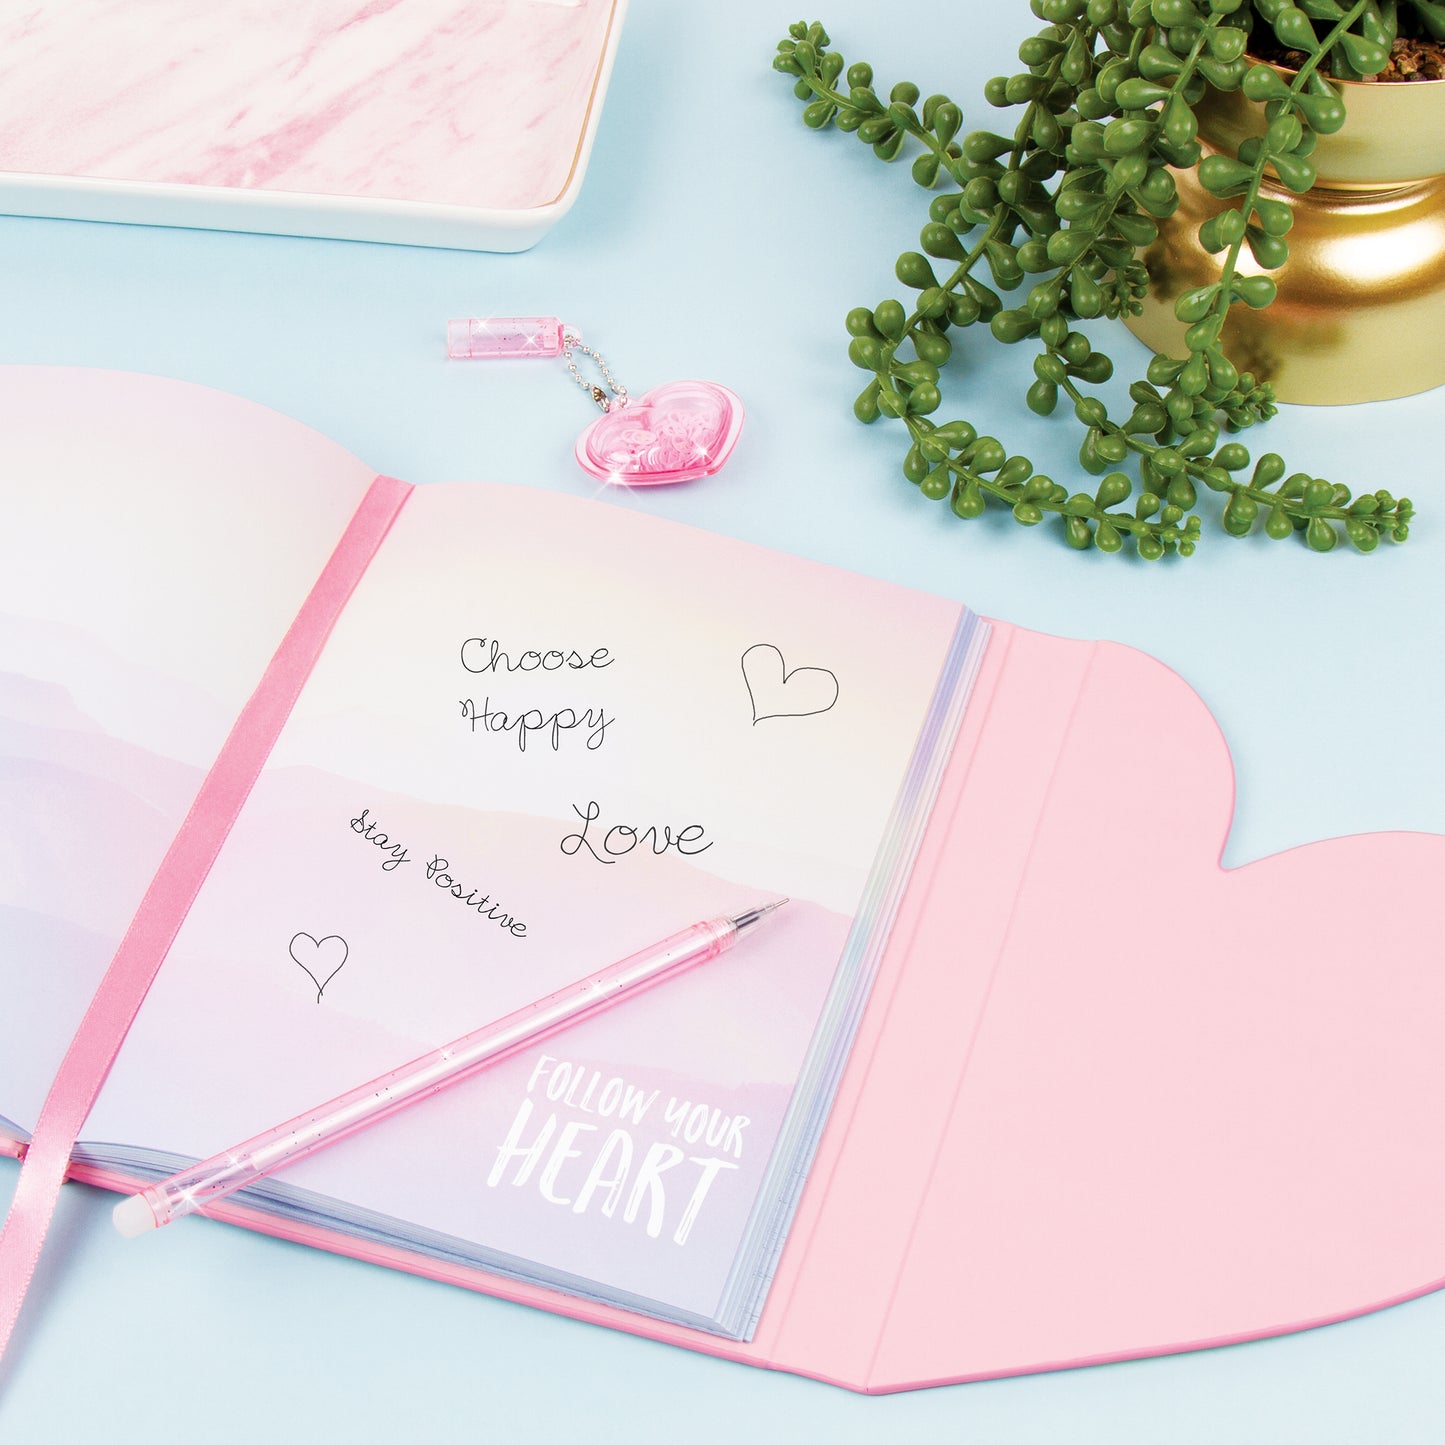 Follow Your Heart Journal and Pen Set